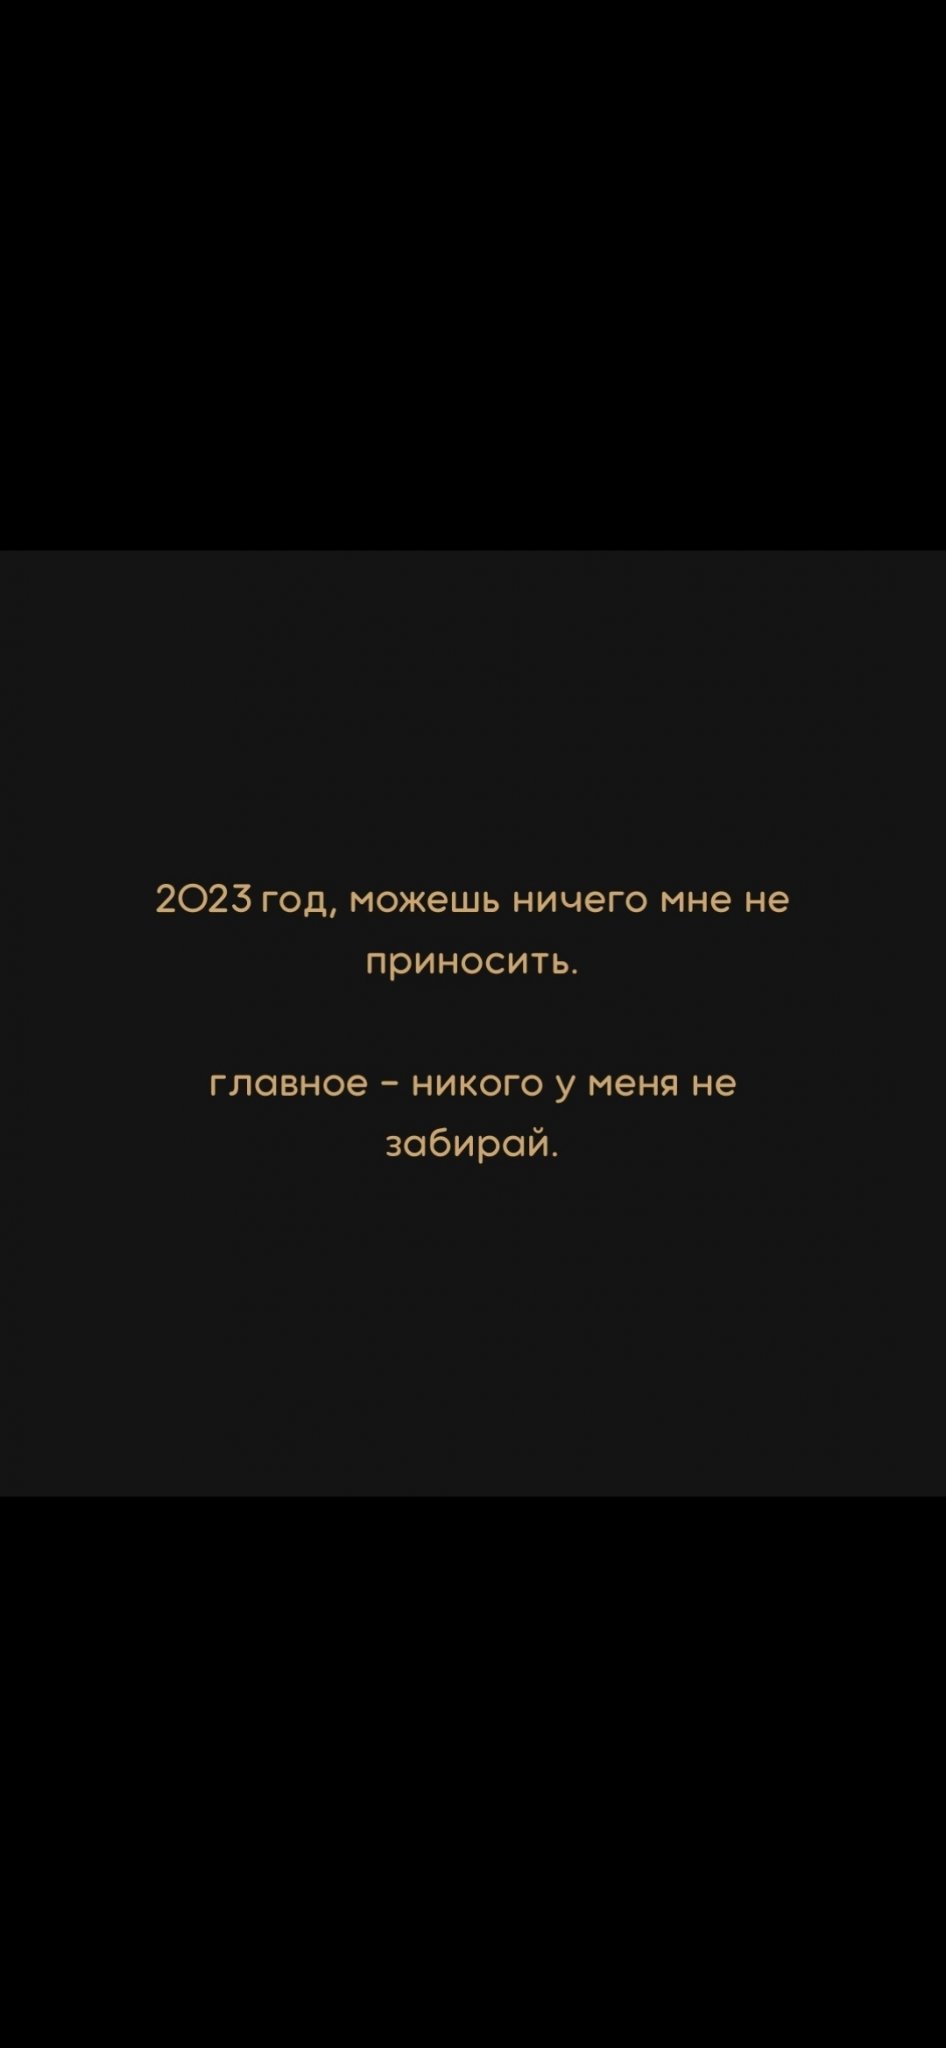 Screenshot_2023-01-01-19-53-28-012_com.vkontakte.android.jpg